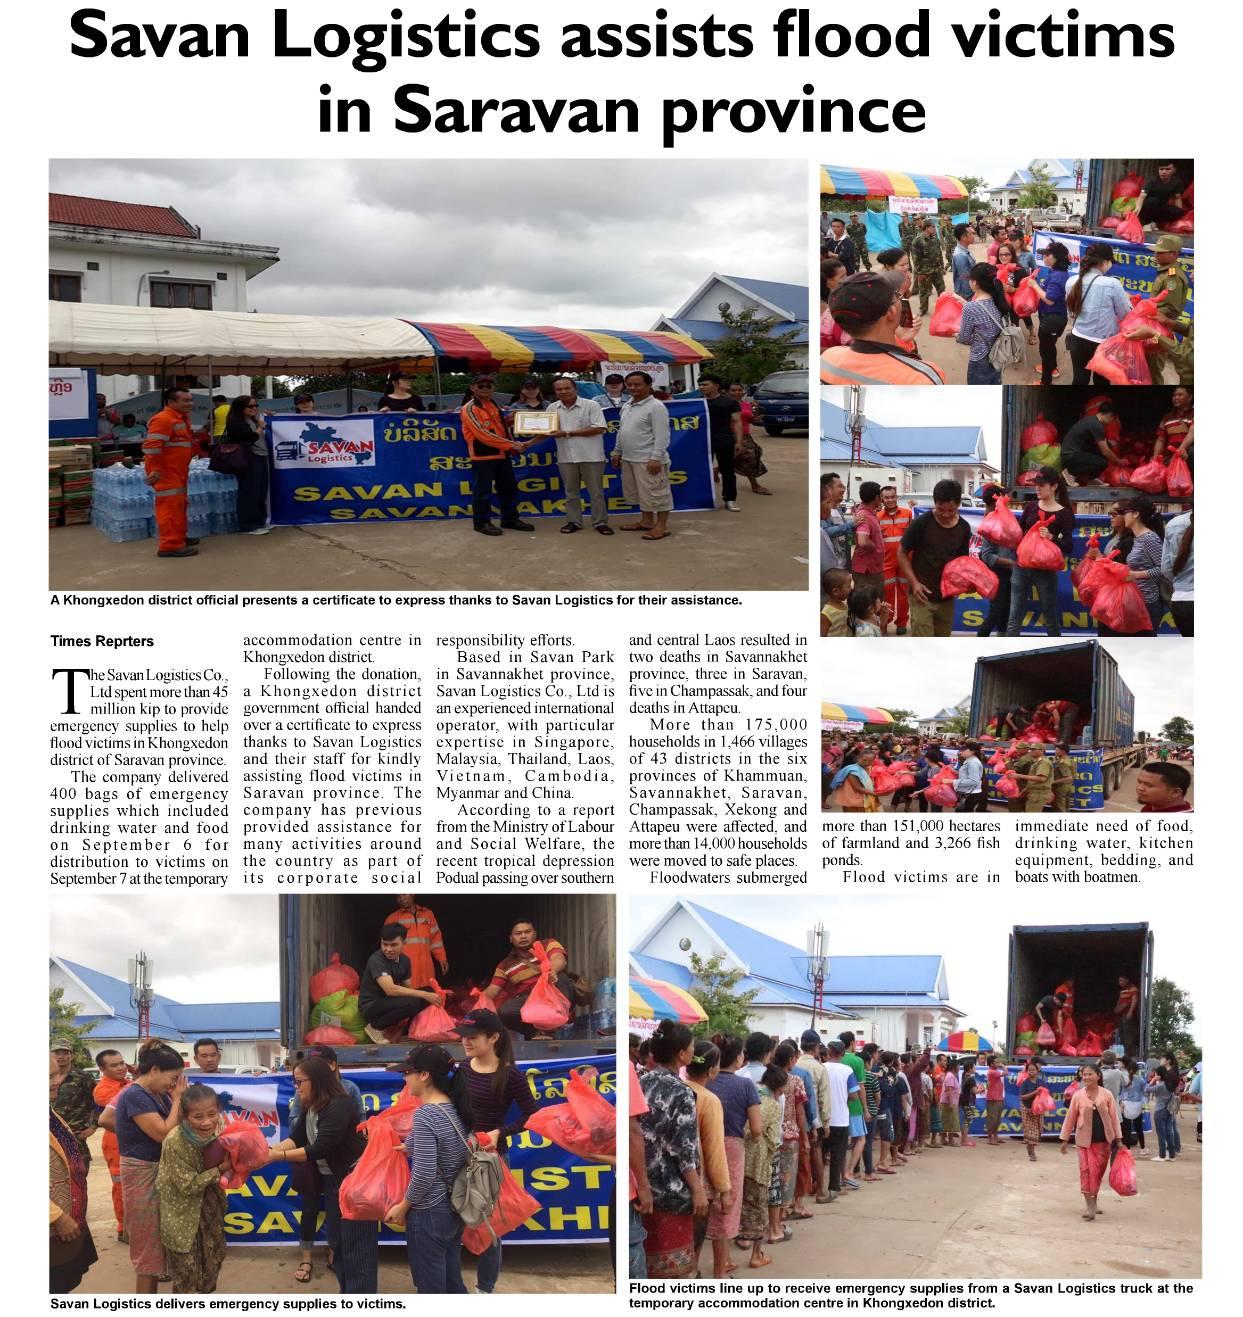 Savan Logistics Assisted Flood Victims in Saravan Province, Laos